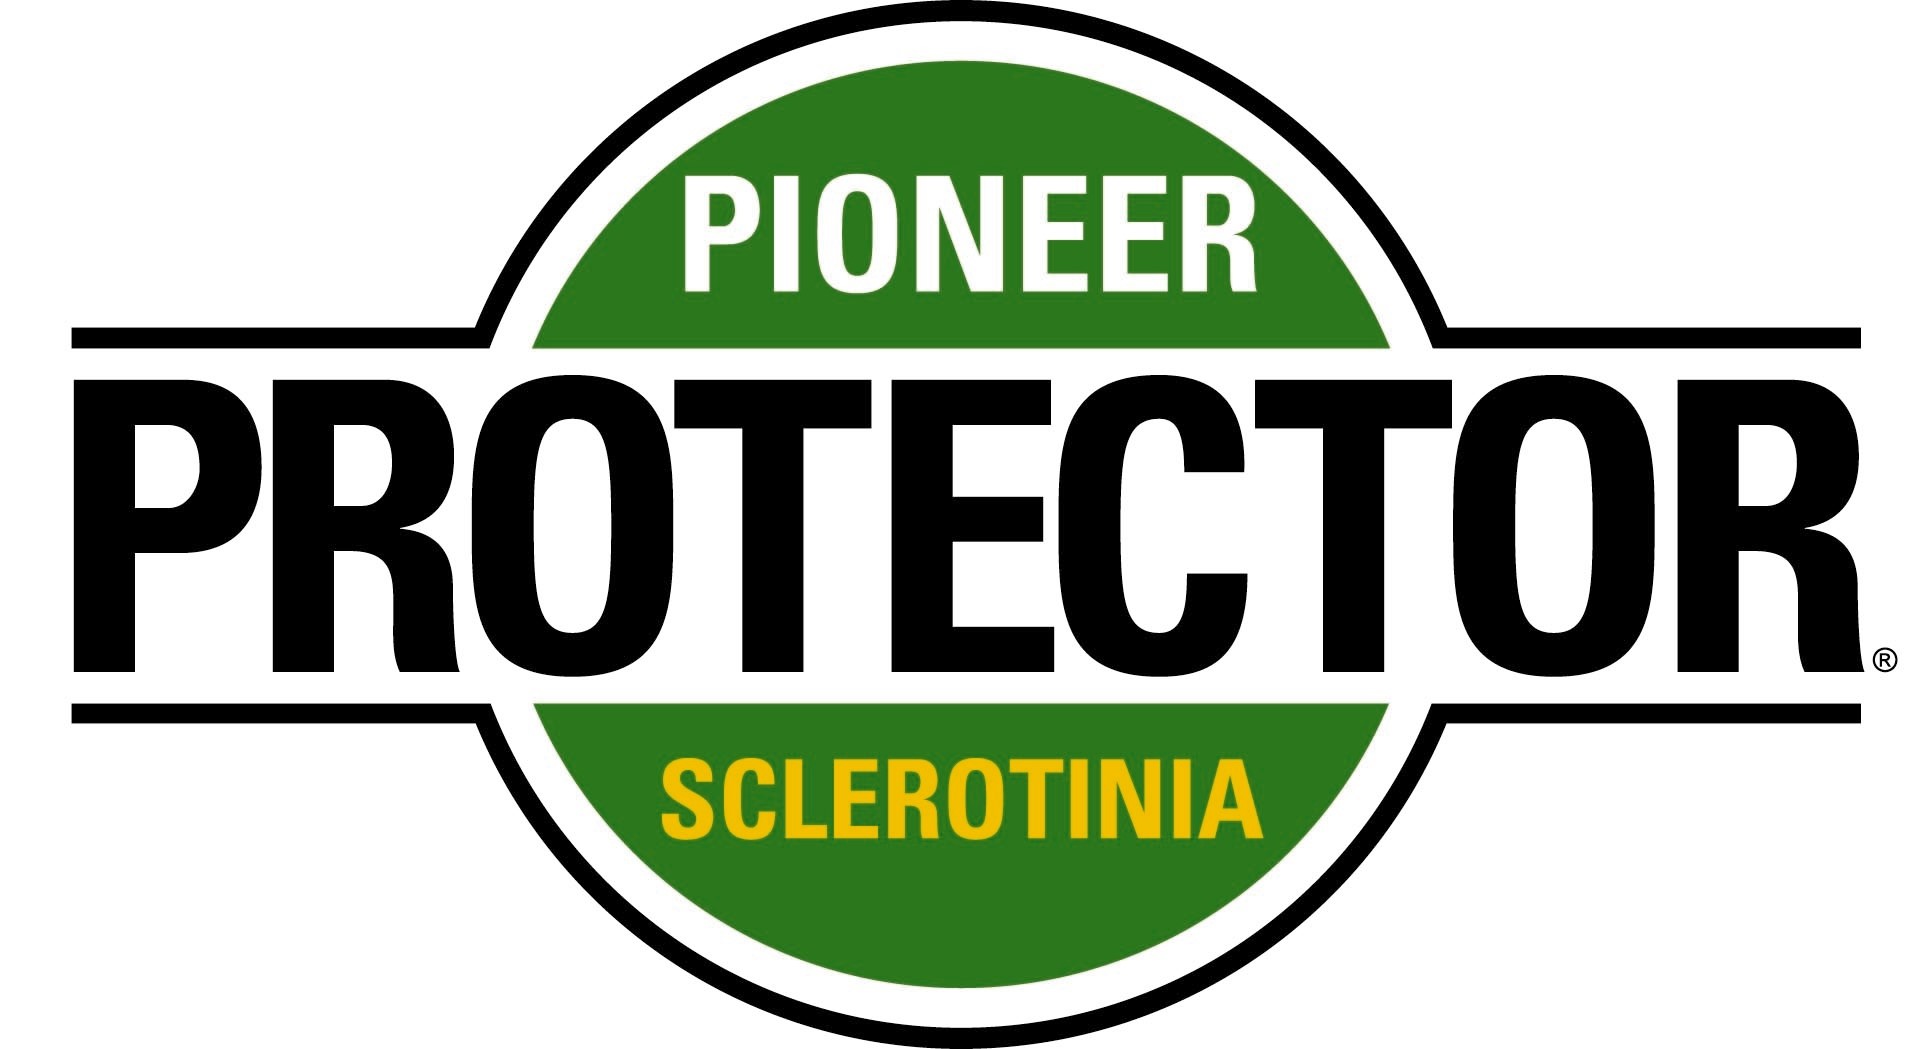 Trait > Pioneer Protector Sclerotinia